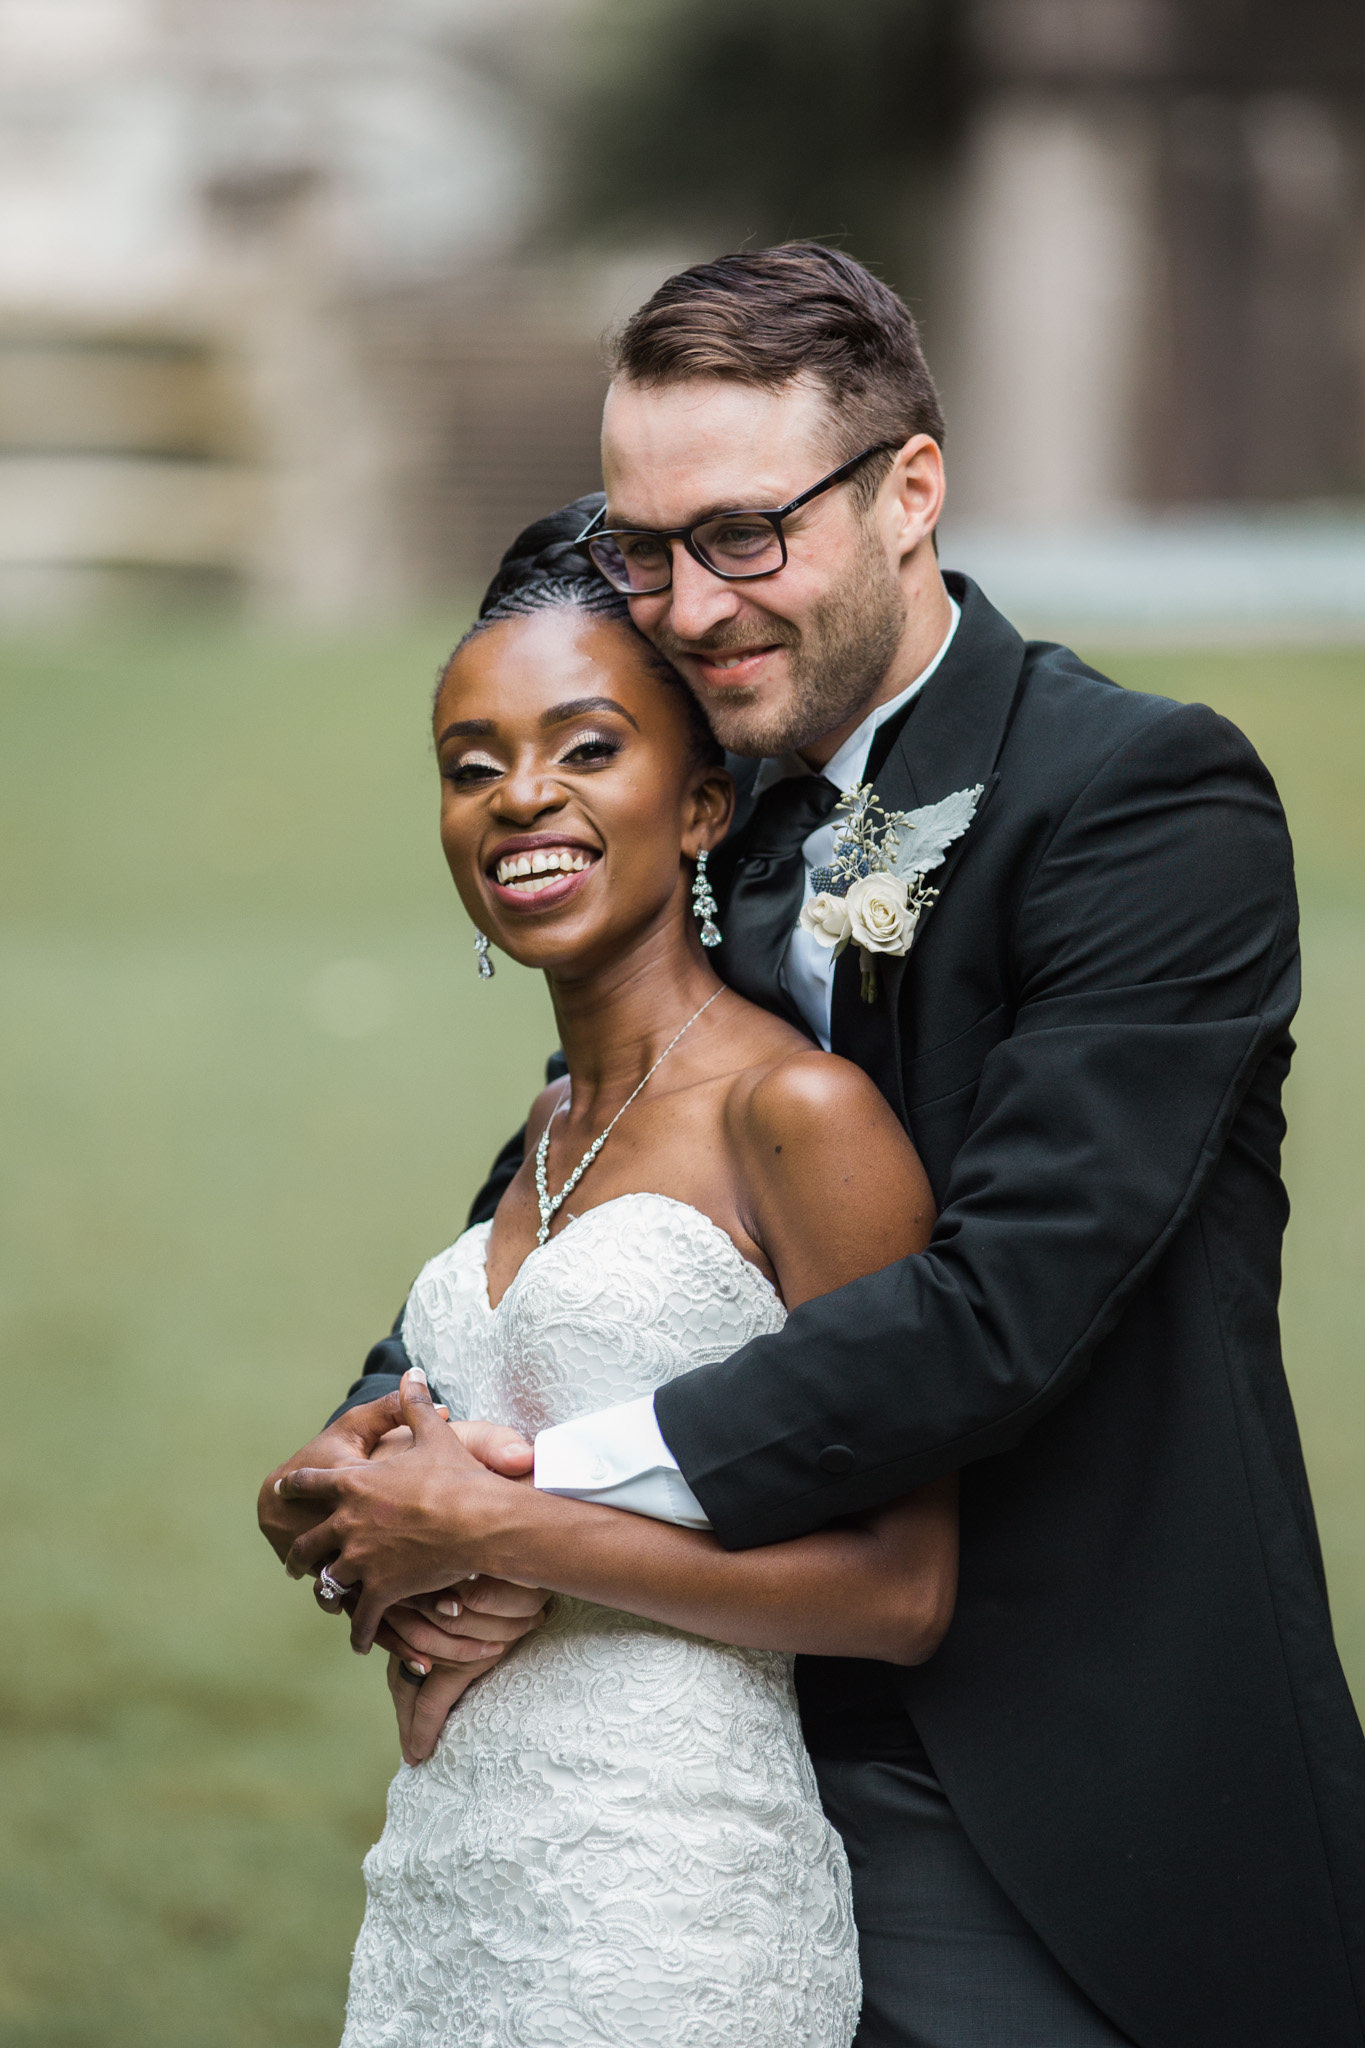 Rebecca Cerasani captures genuine emotions at this real wedding at the Atlanta History Center Swan House